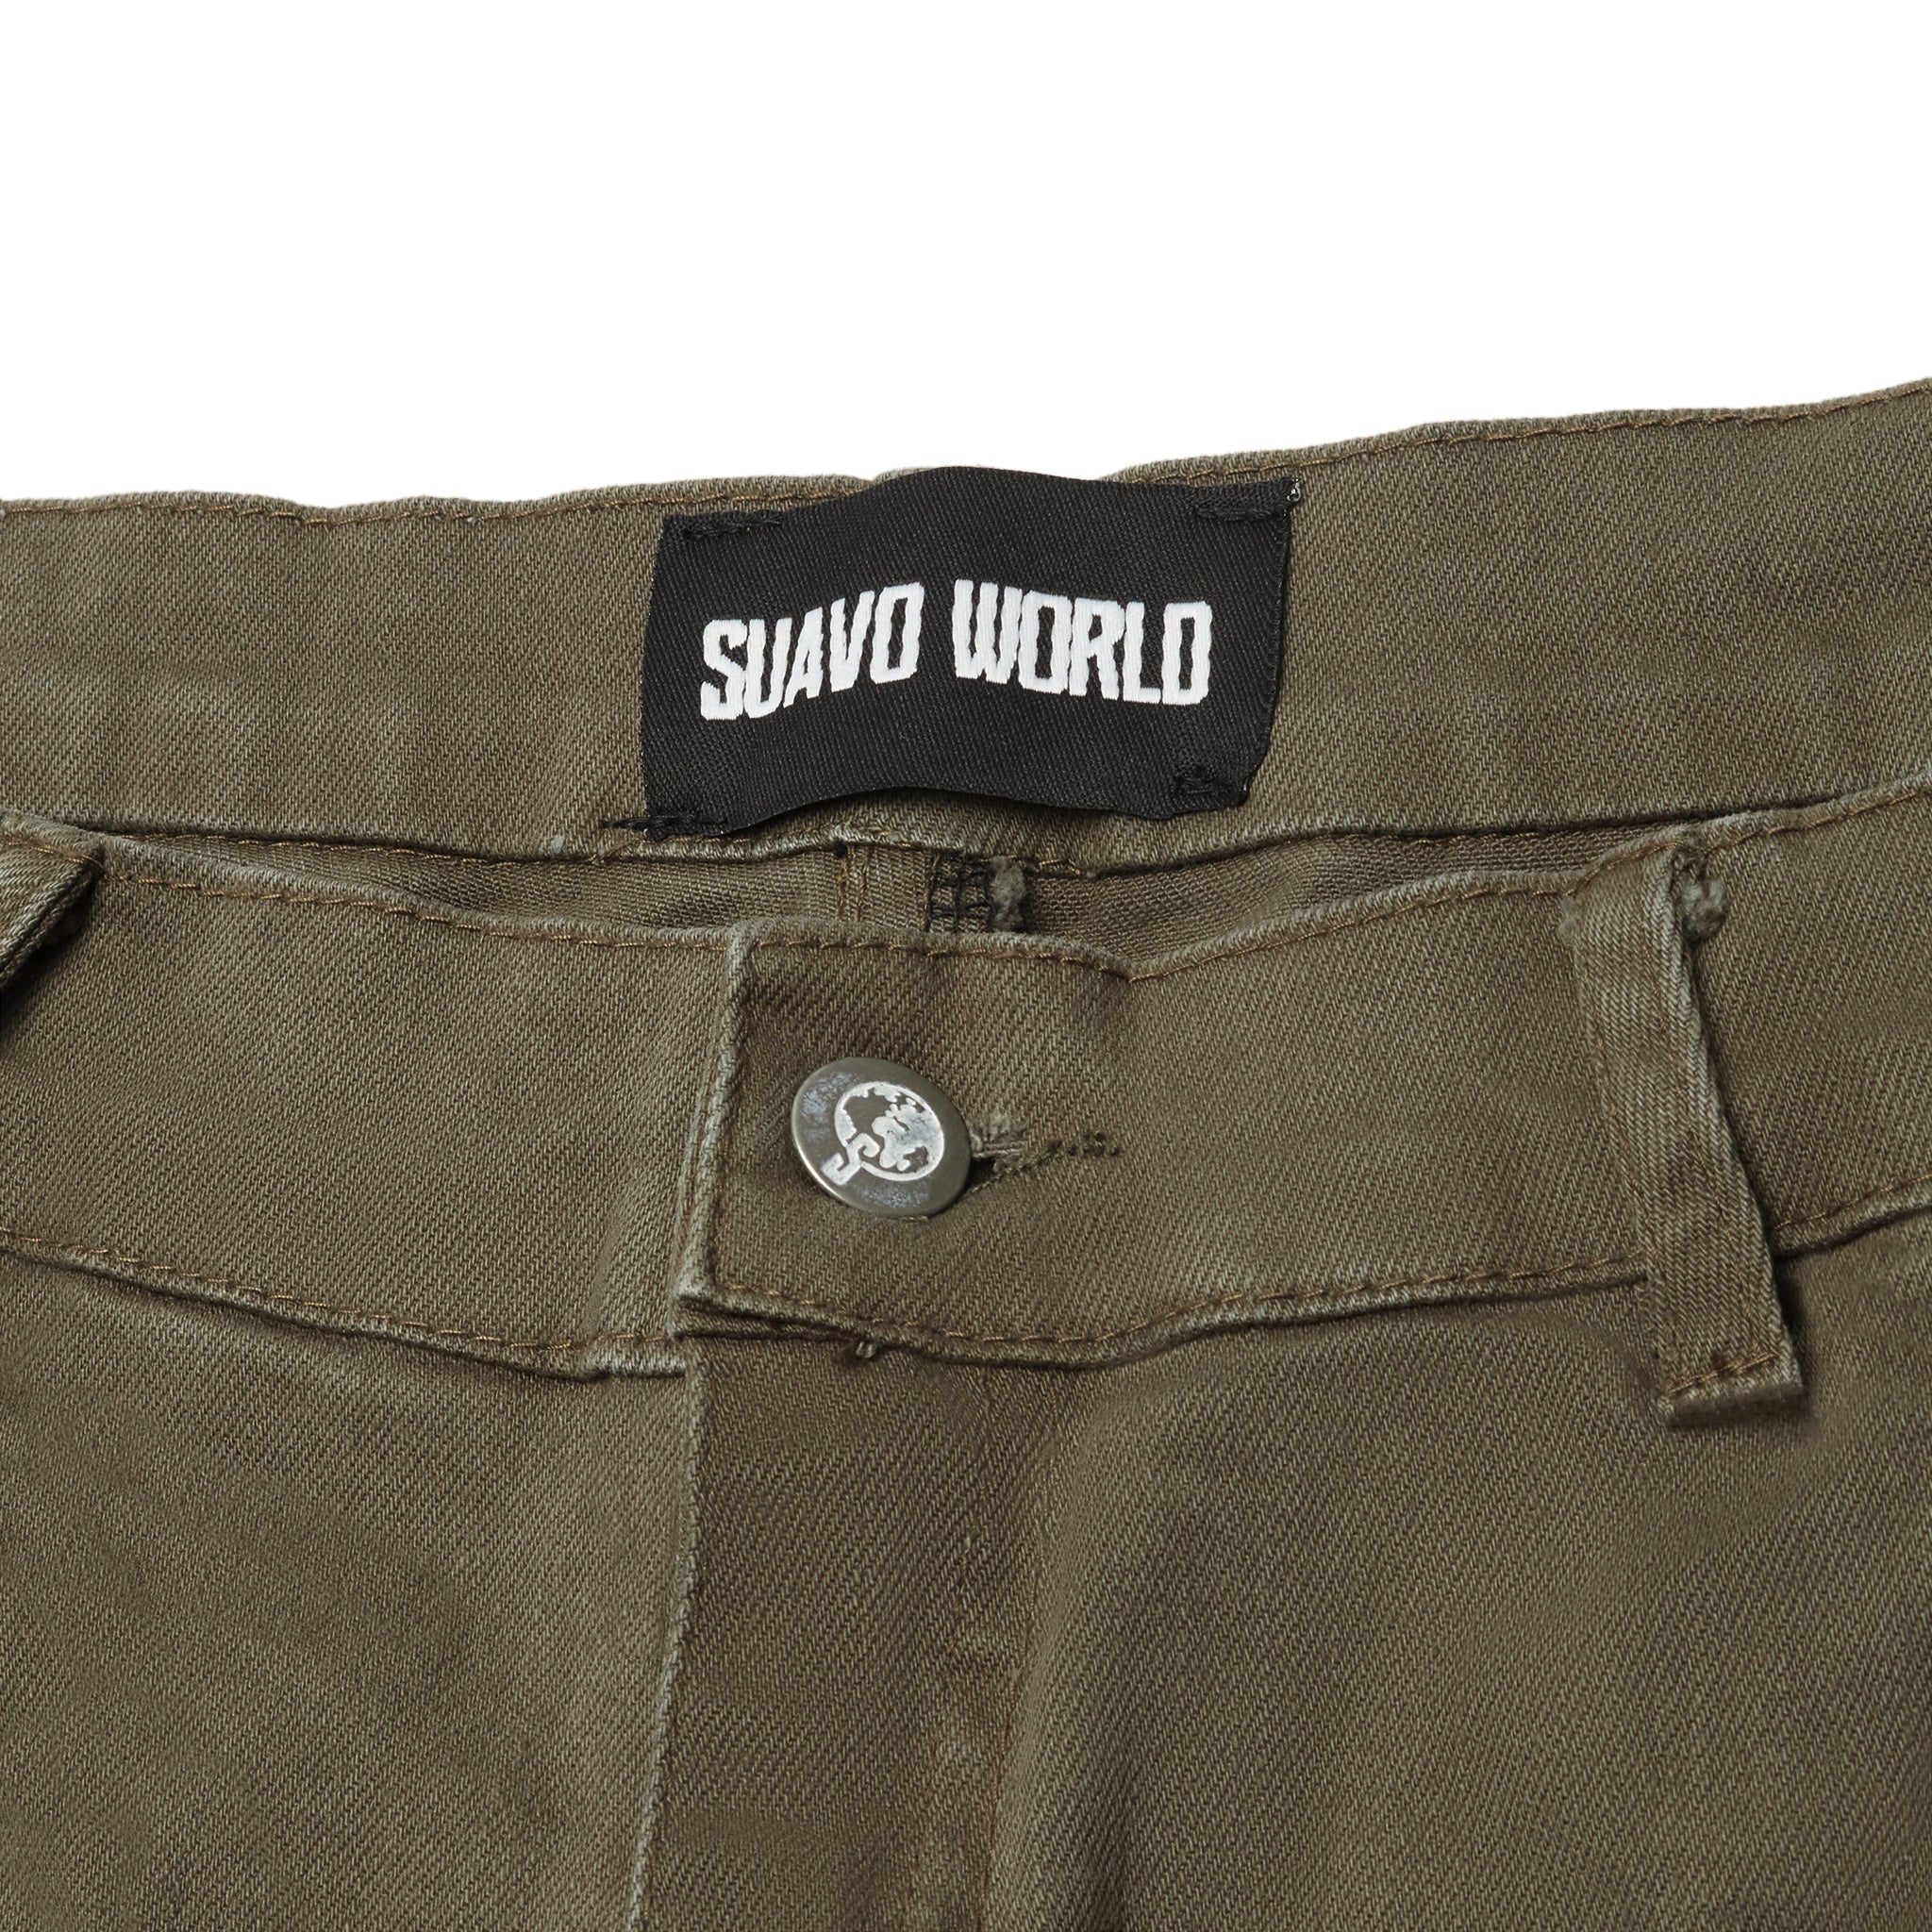 Label view of Suavo World Flare Denim Khaki